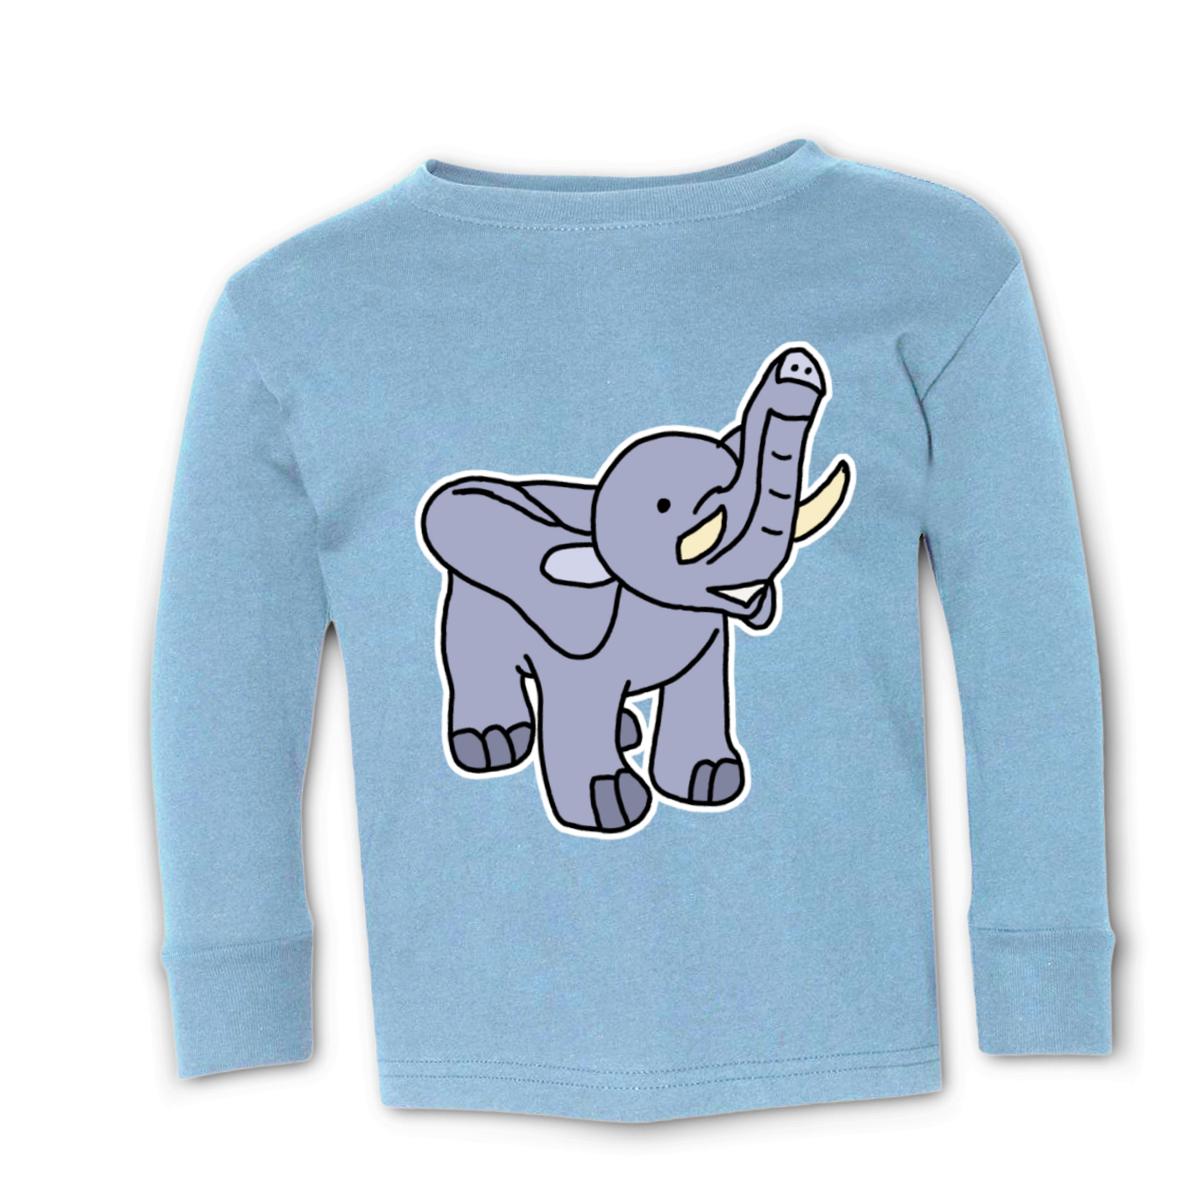 Toy Elephant Kid's Long Sleeve Tee Large light-blue